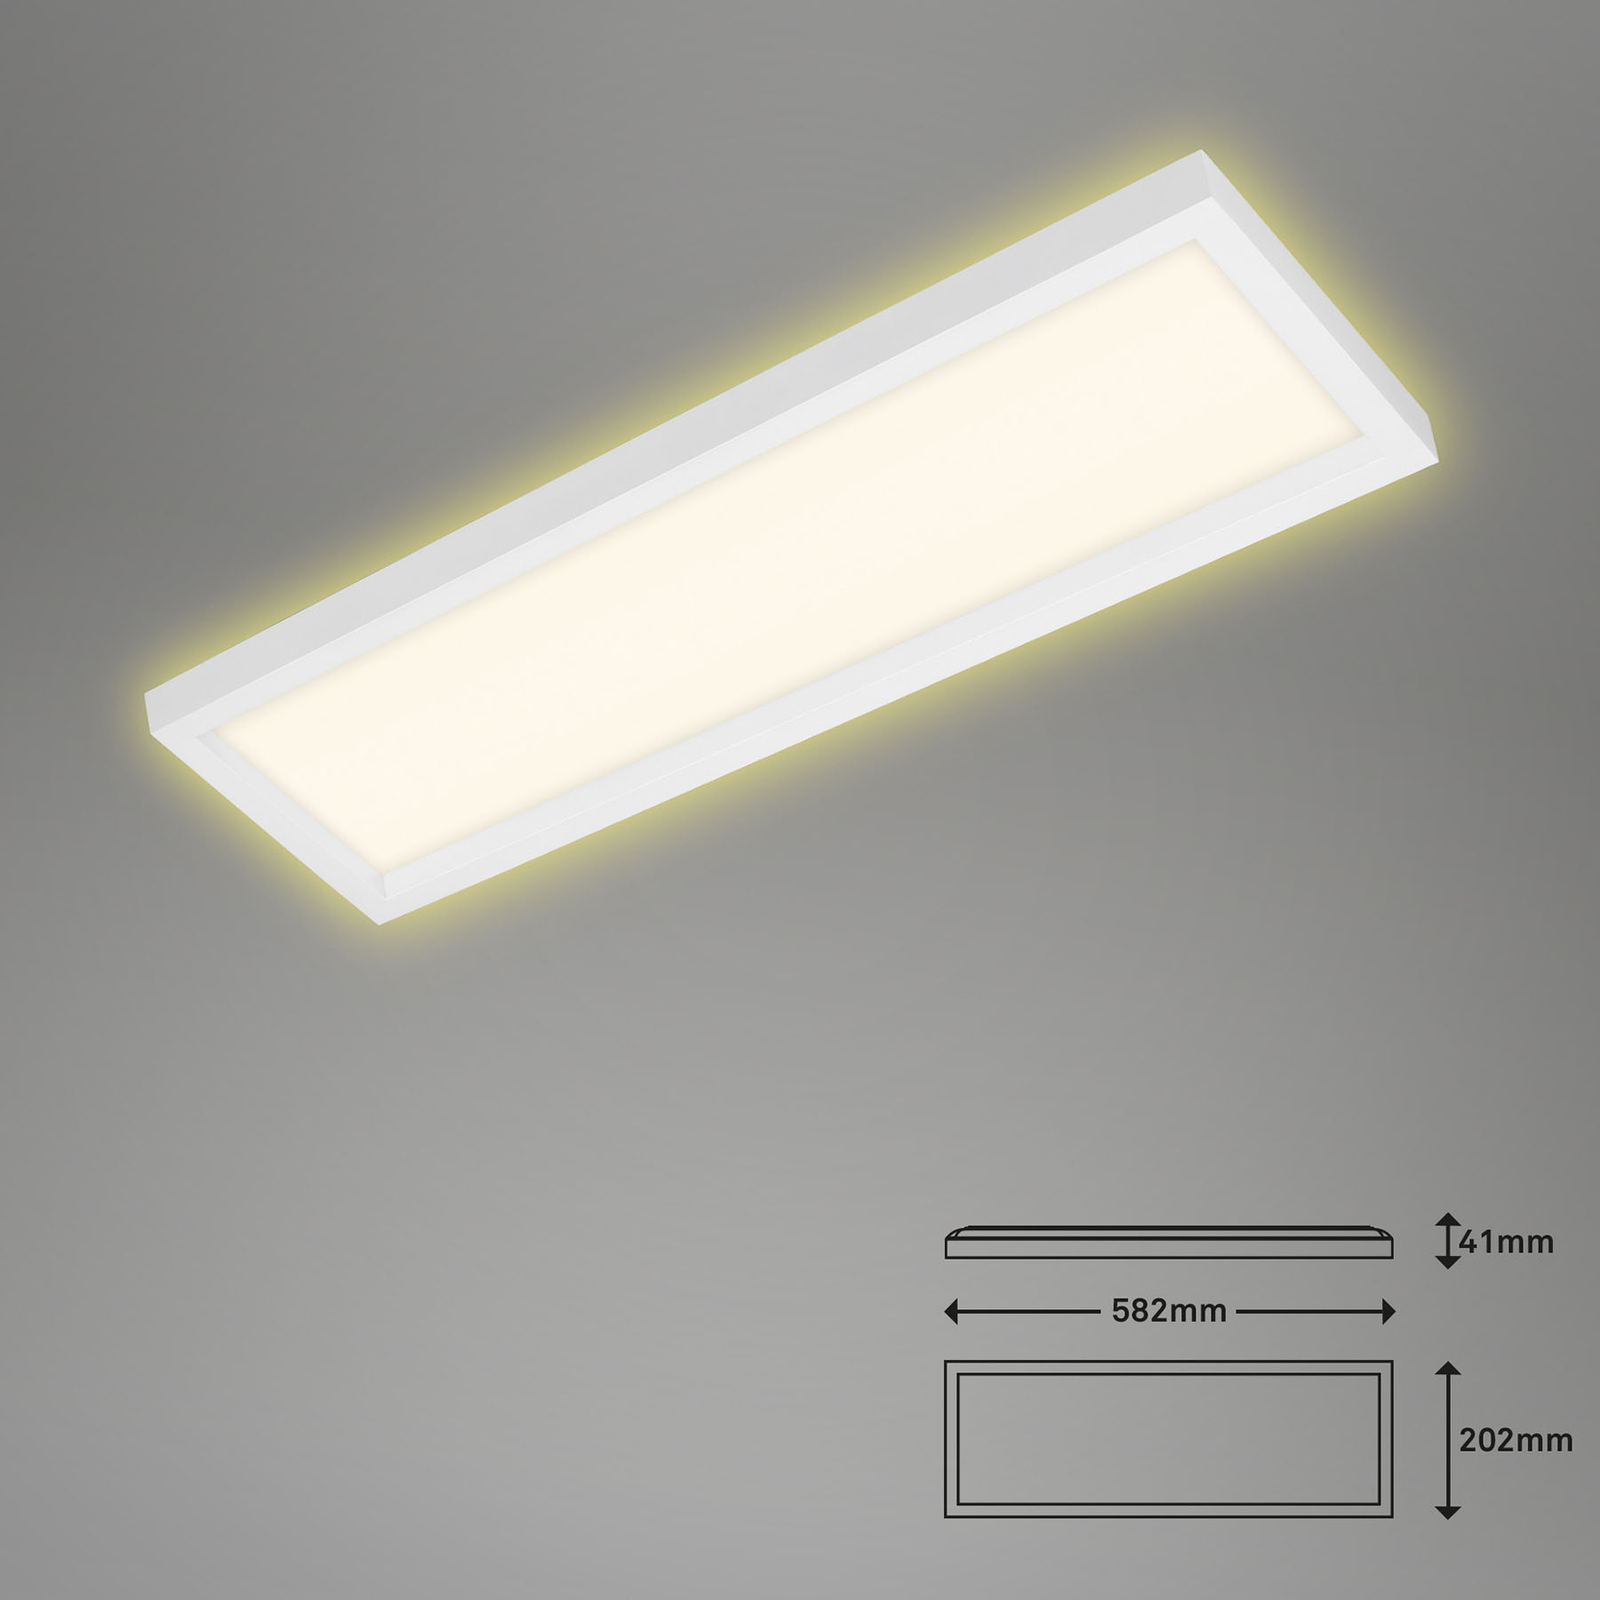 LED plafondlamp 7365, 58 x 20 cm, wit